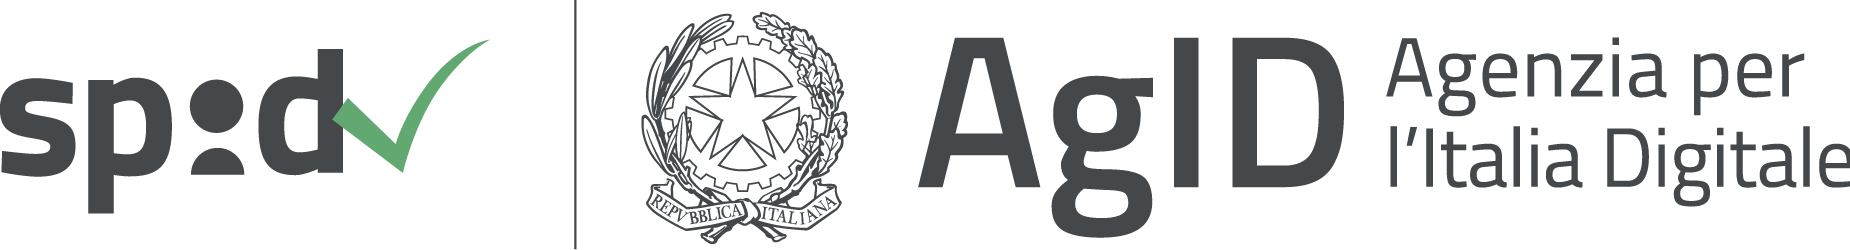 logo AgID SPID